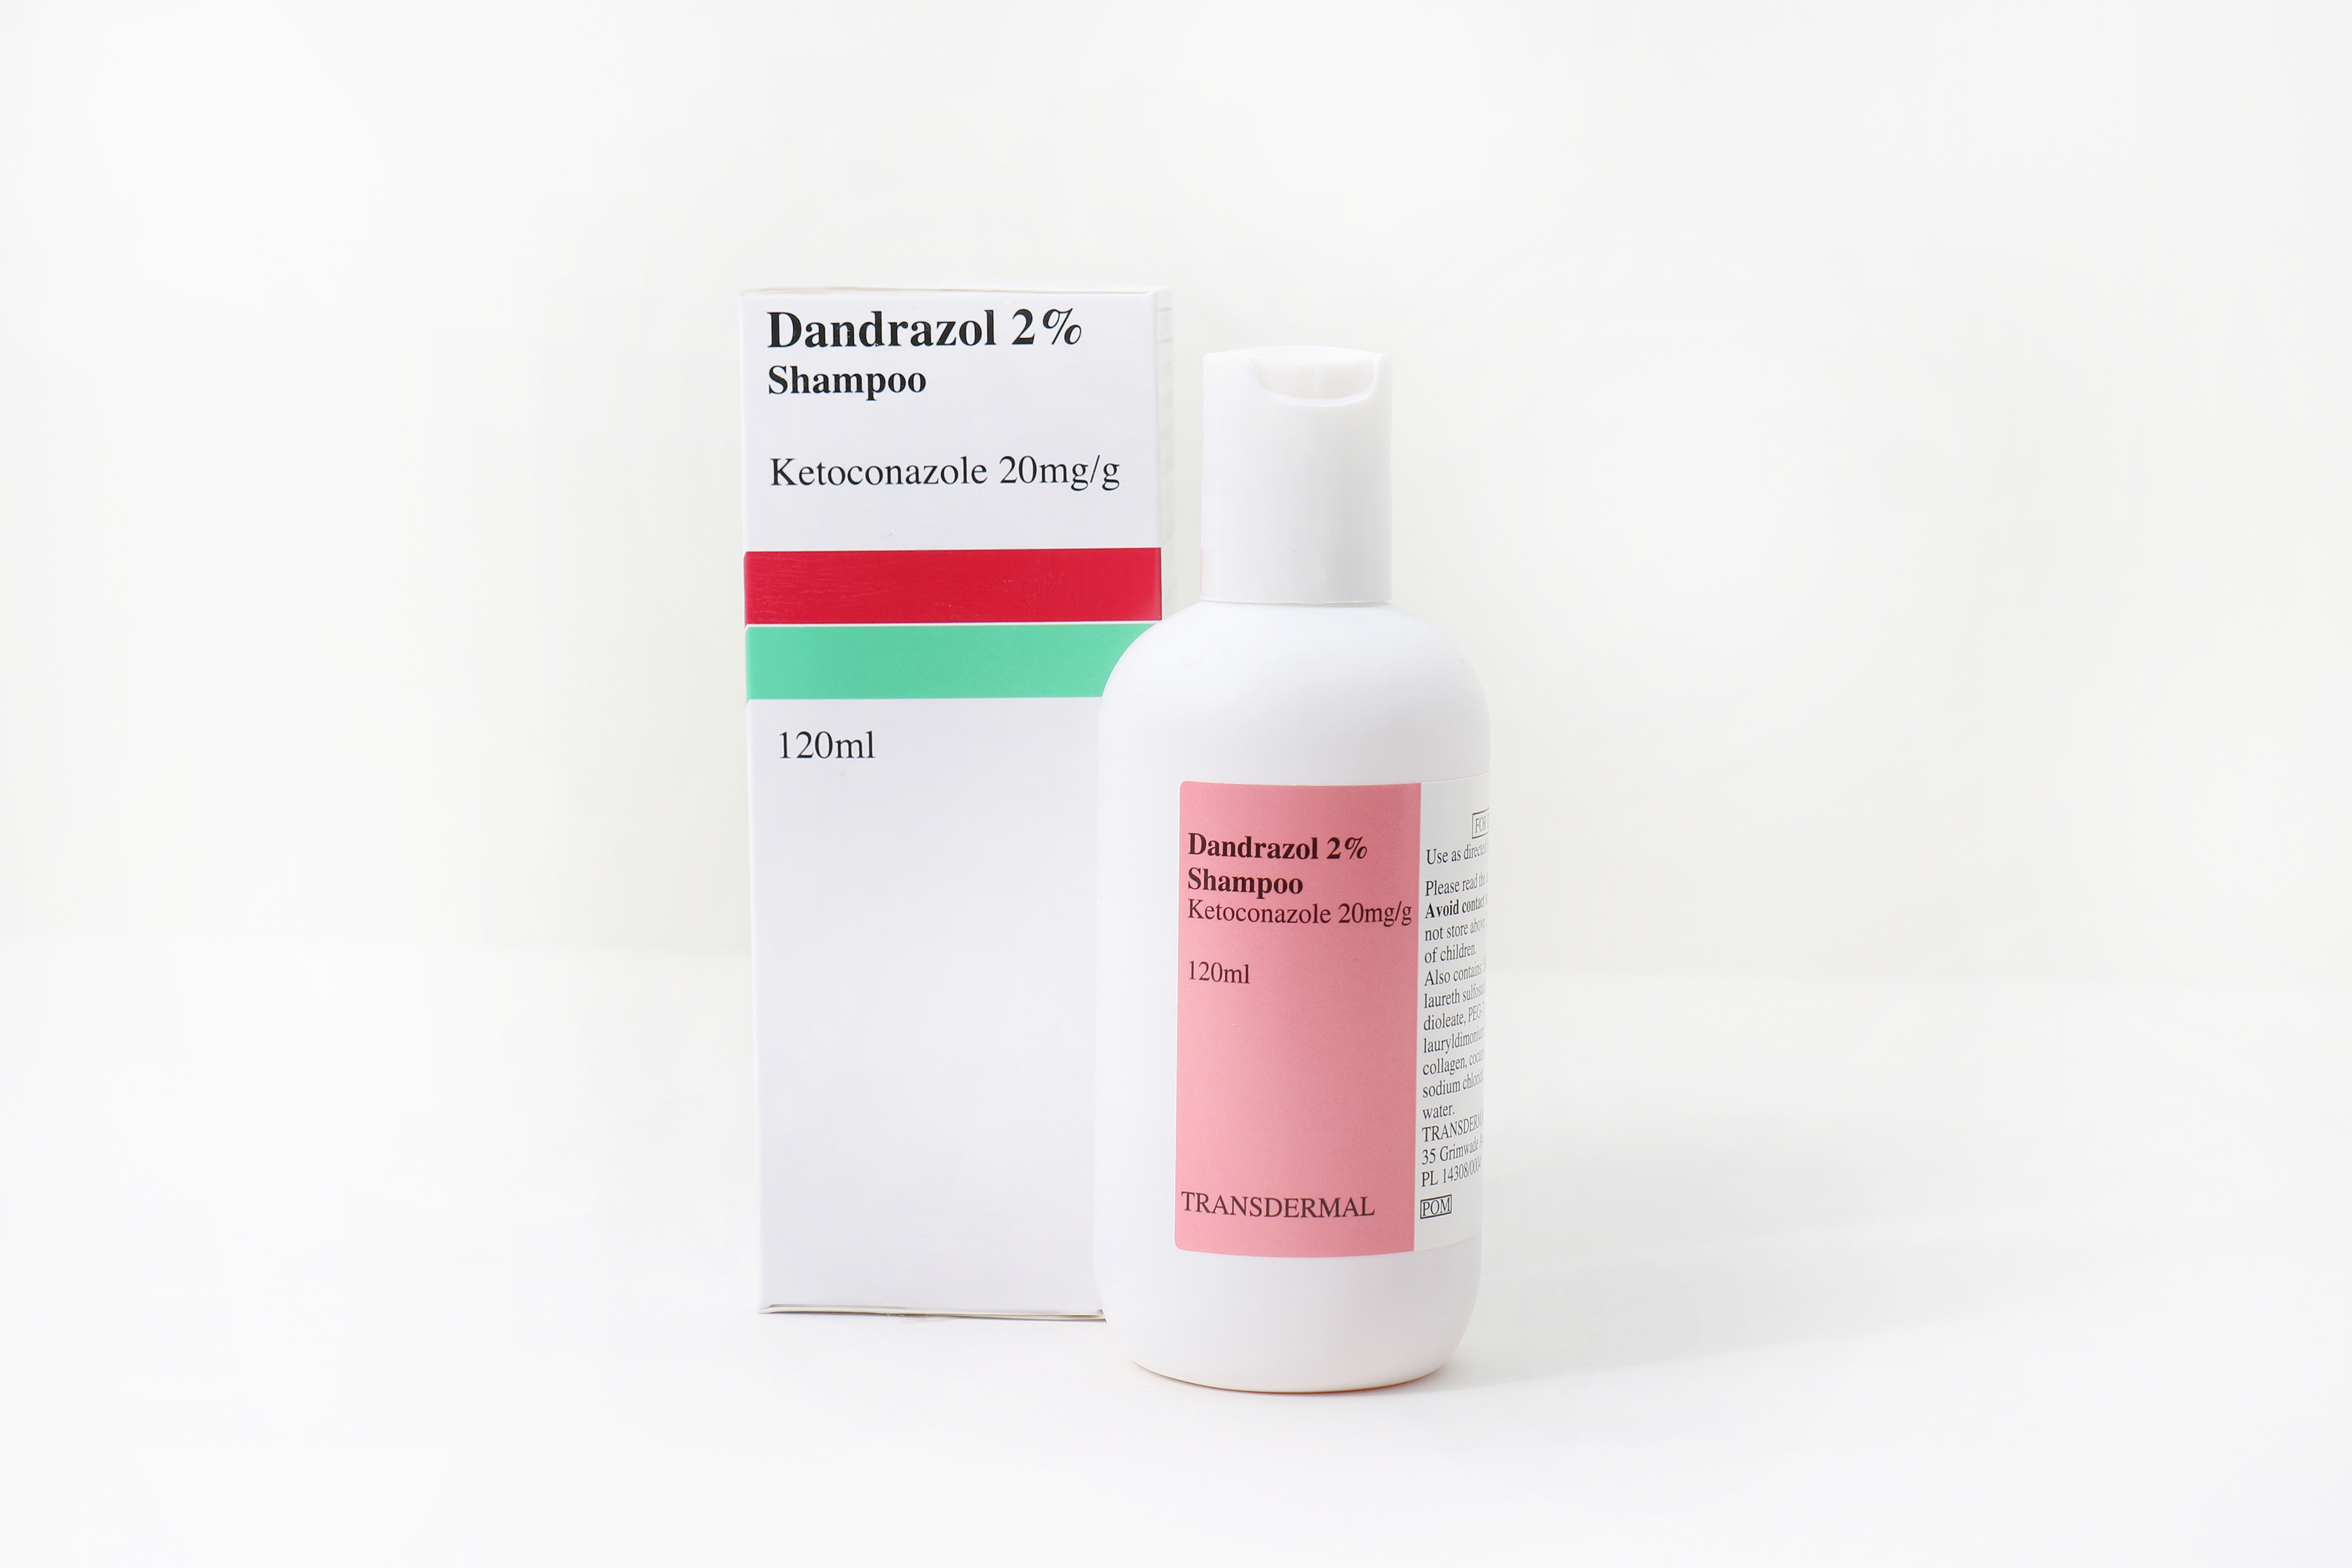 Dandrazol 2% Shampoo